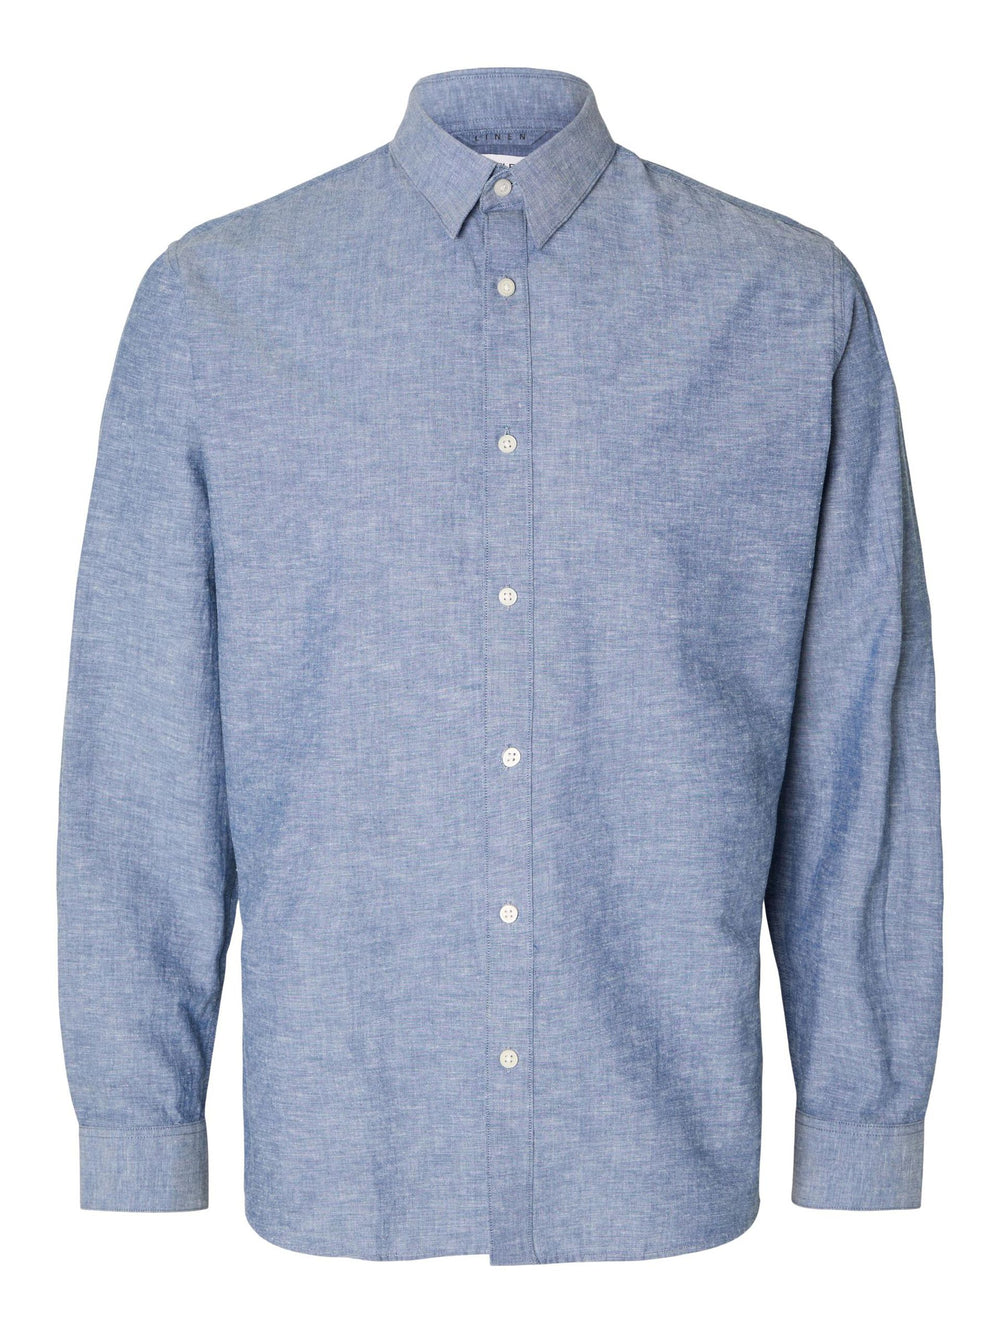 SLHSLIMNEW-LINEN Medium Blue Denim Shirt